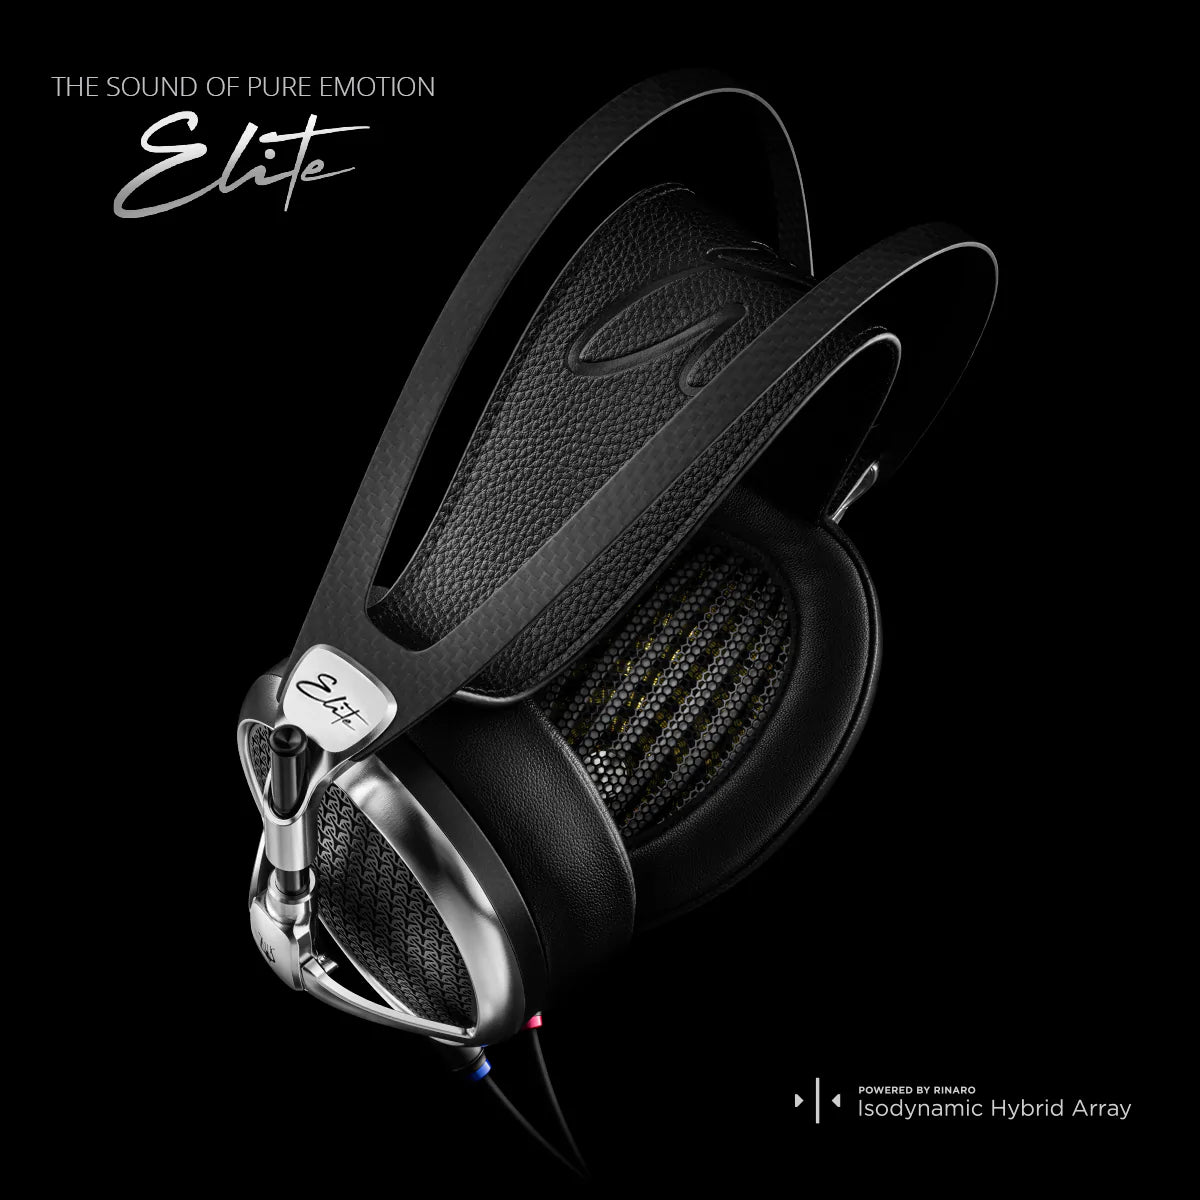 Meze ELITE - State of the art Over Ear Headphone Powered by RINARO Isodynamic Hybrid Array